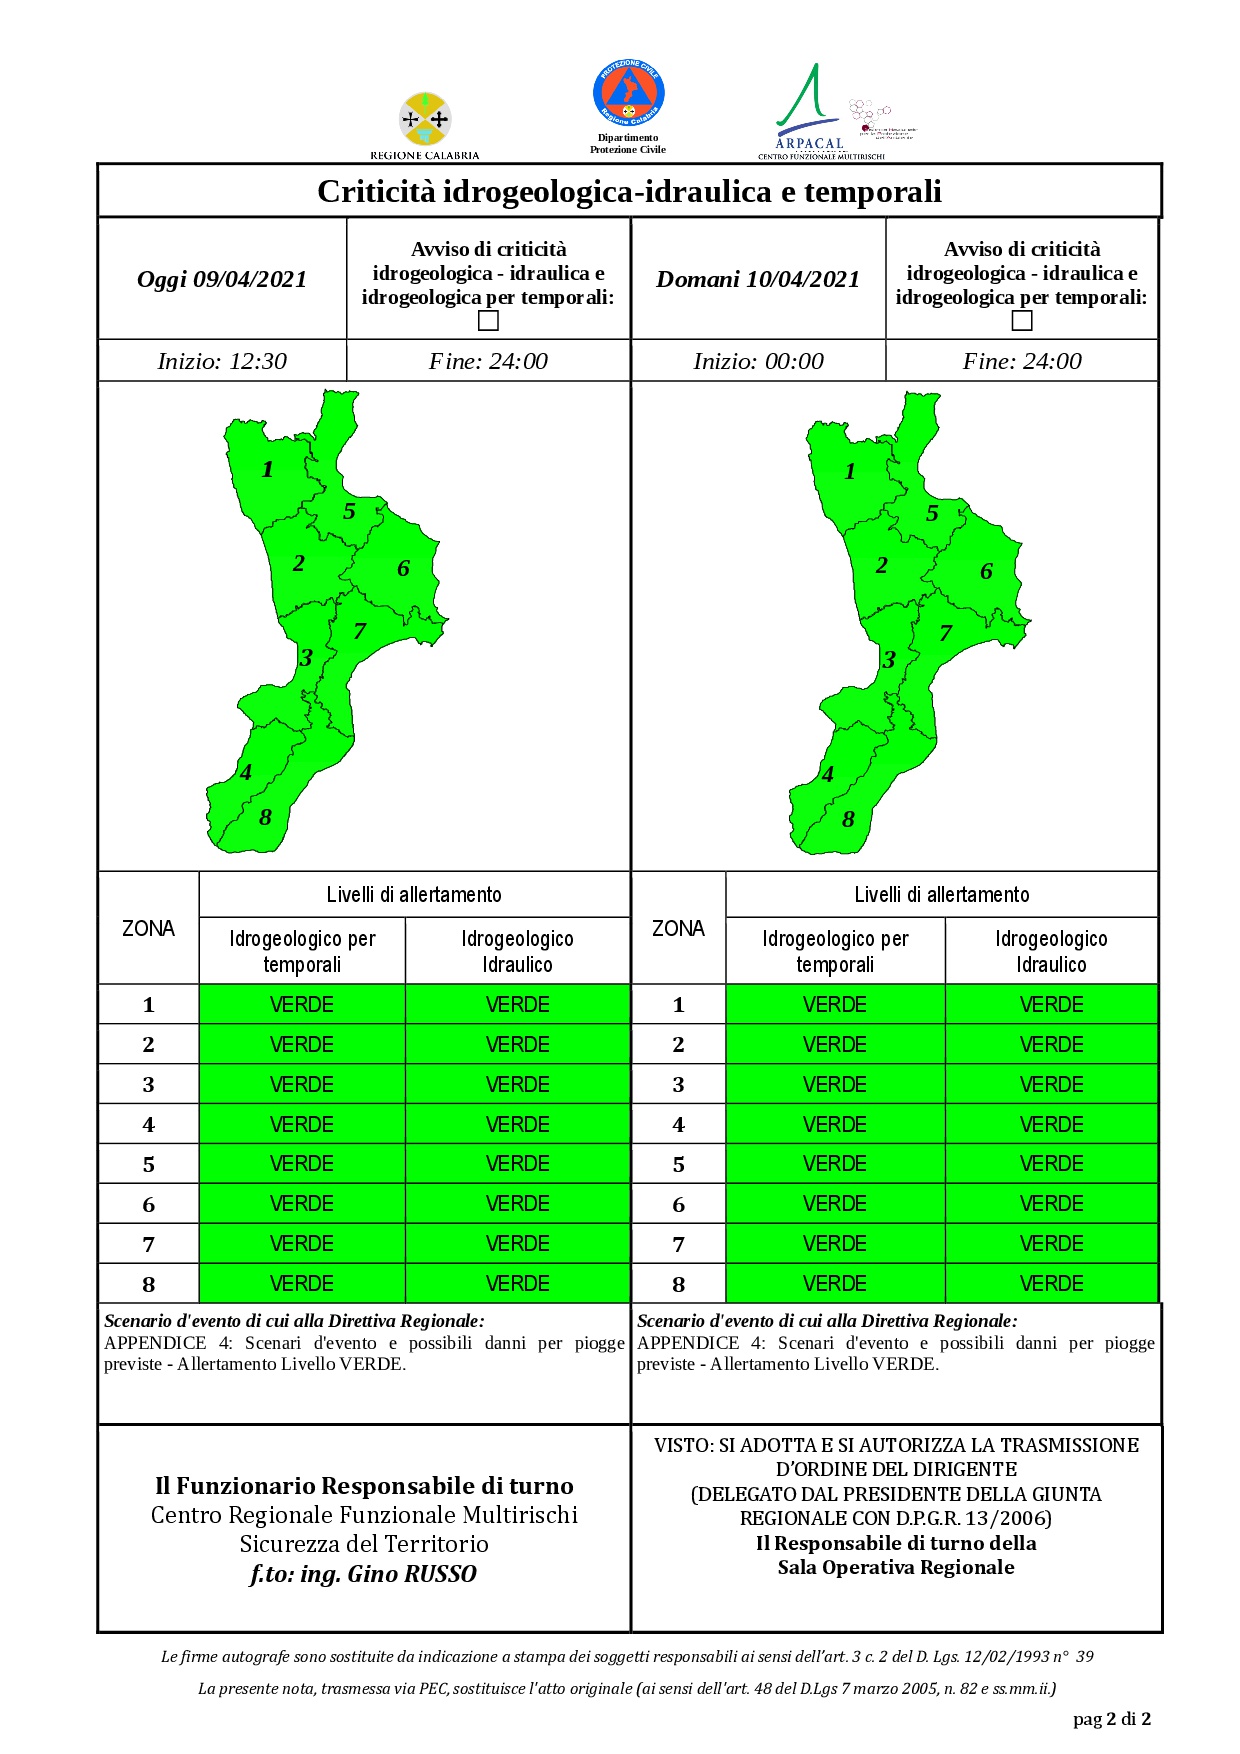 Criticità idrogeologica-idraulica e temporali in Calabria 09-04-2021